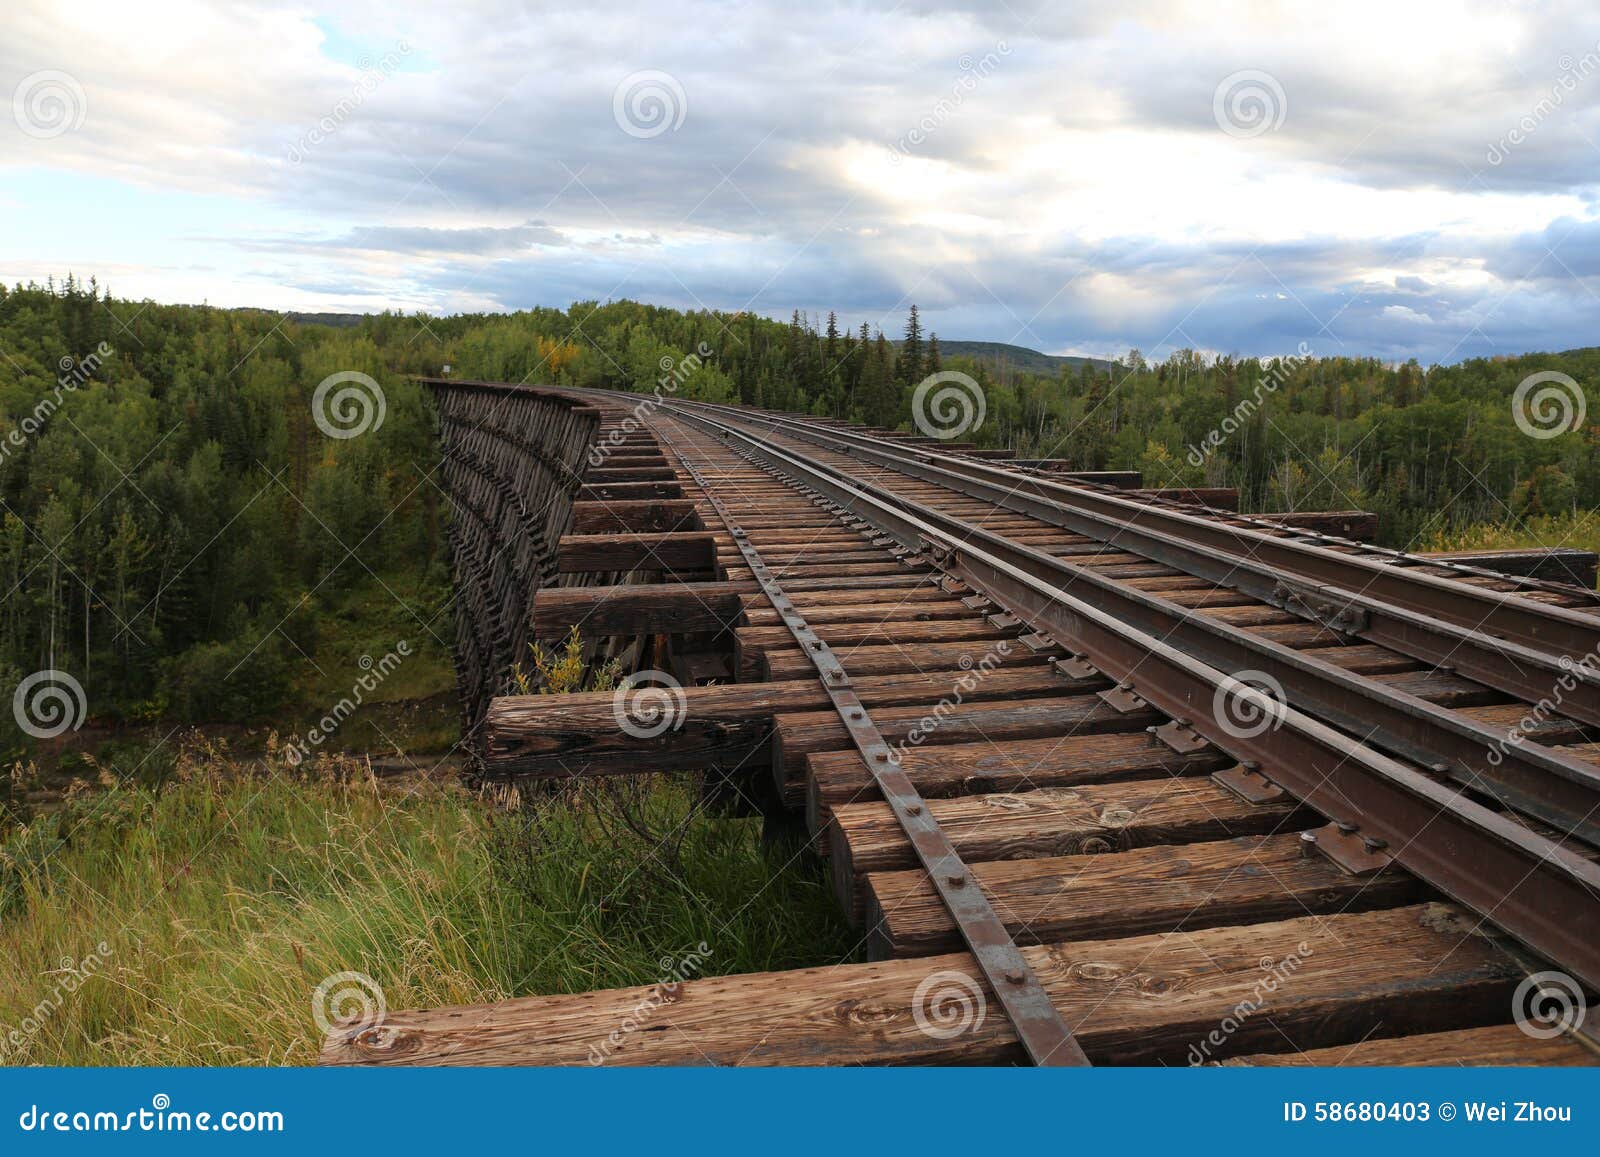 wooden train trestle